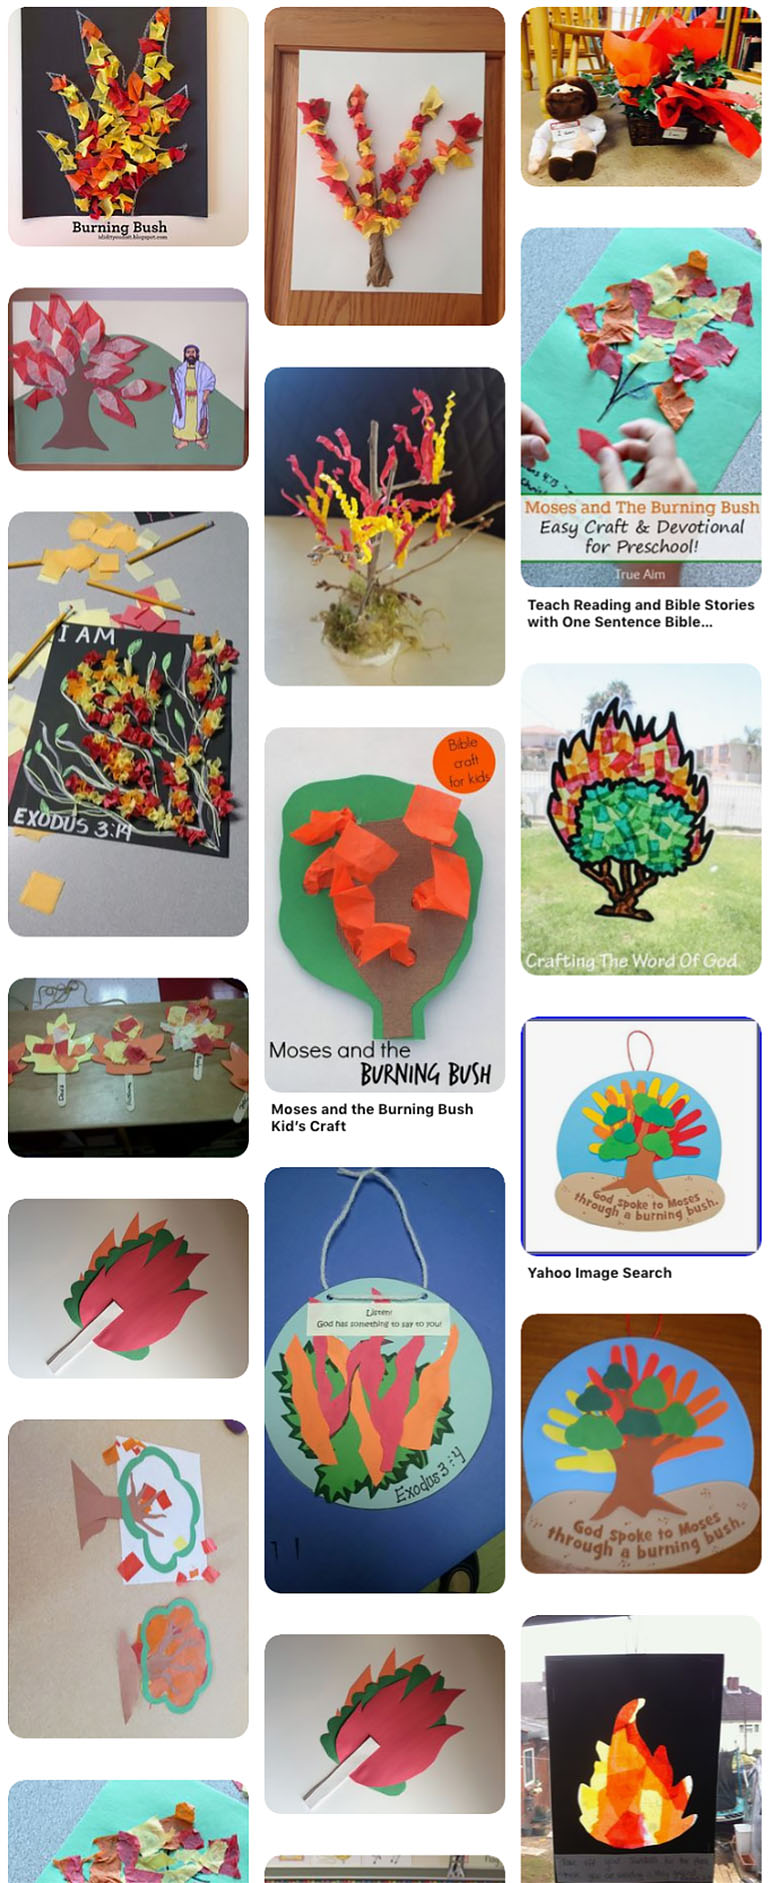 Burning Bush - Colored Paper Craft - SundaySchoolist